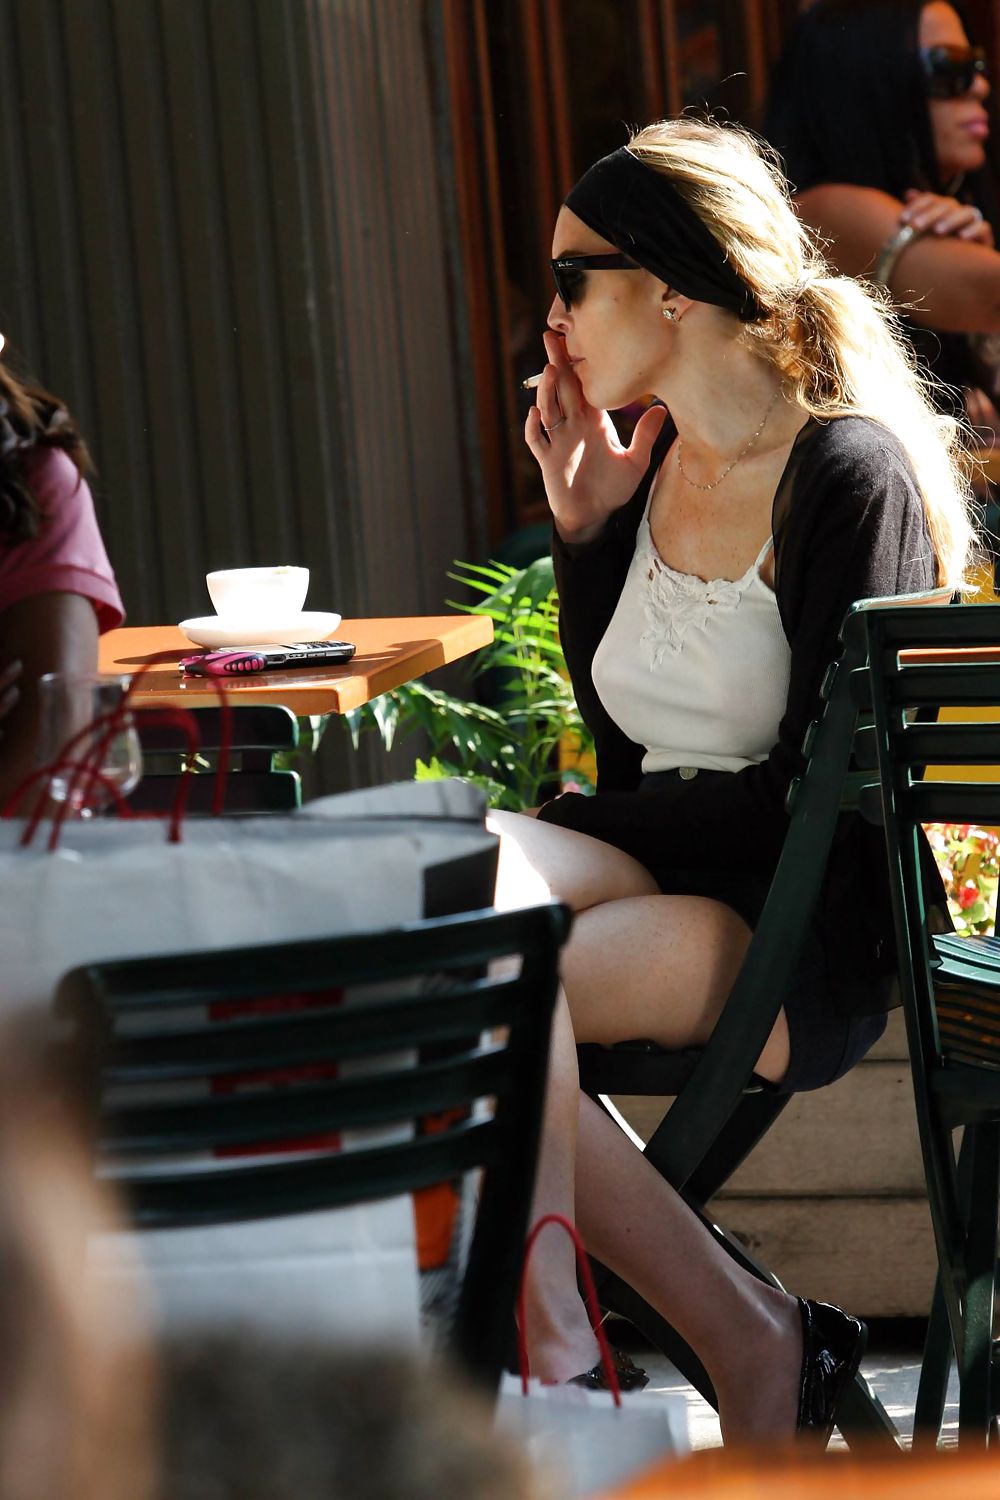 Lindsay Lohan is leggy smoking a cigarette in denim shorts #3647132